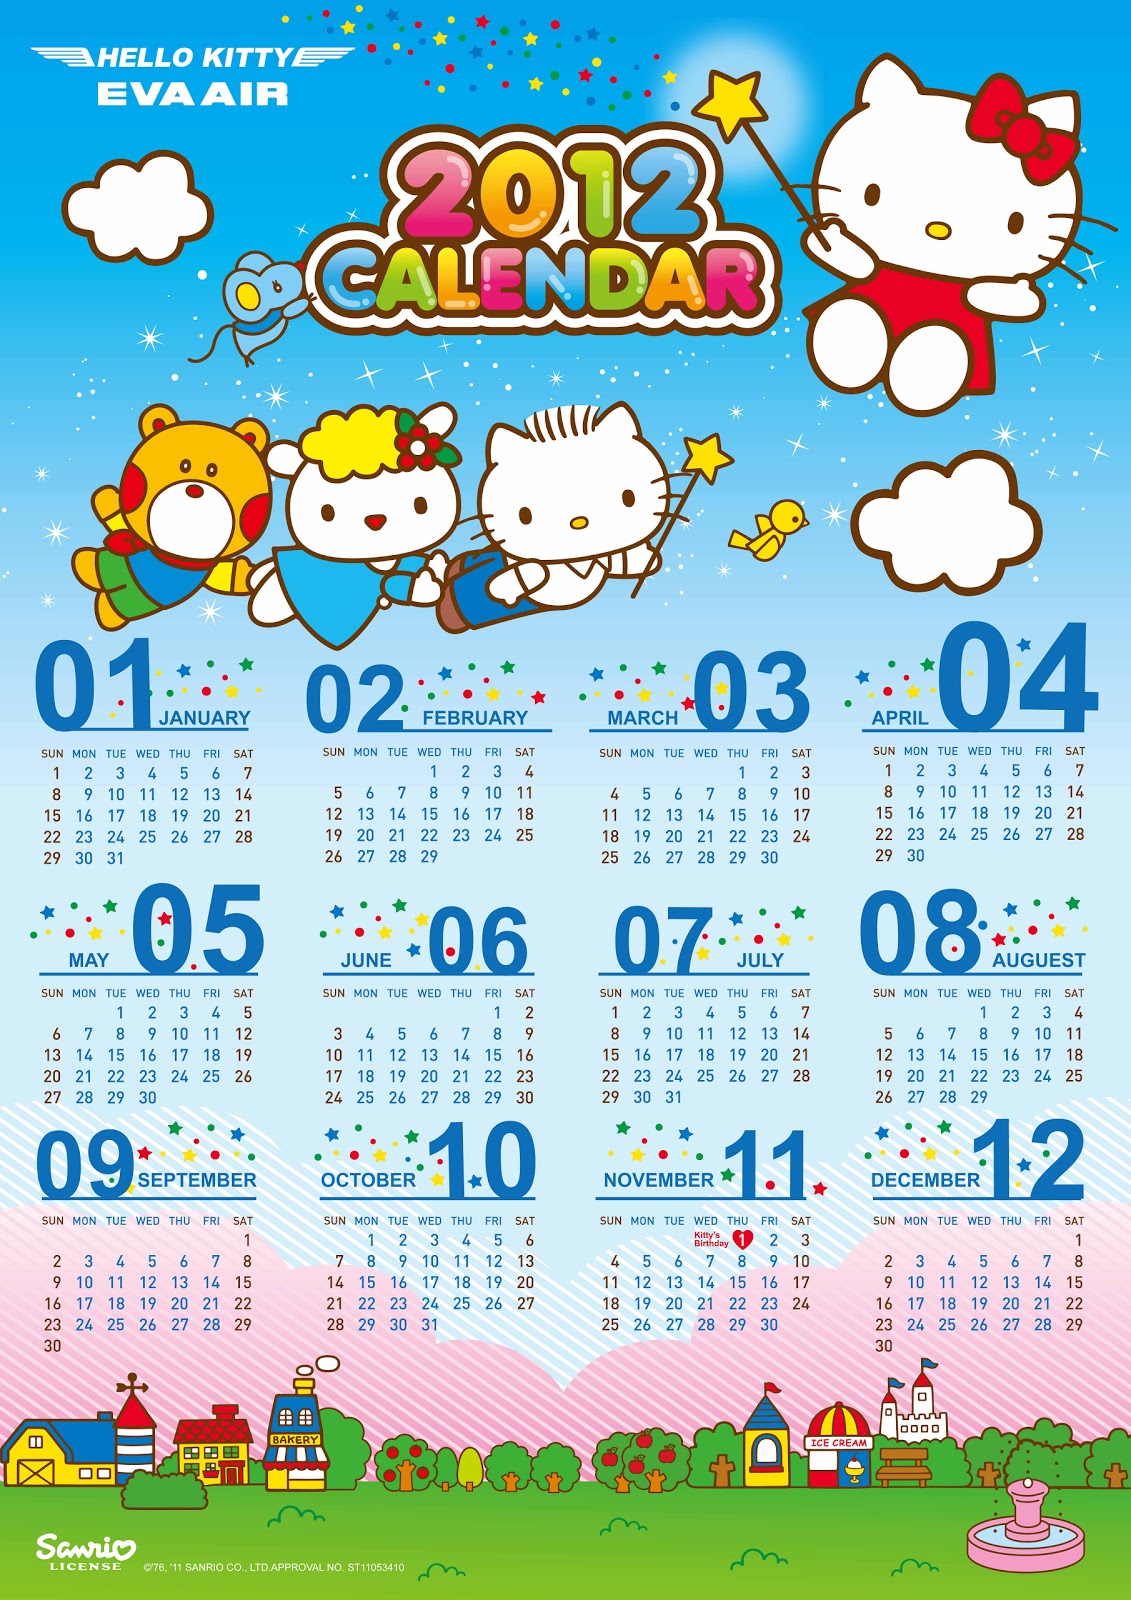 http://3.bp.blogspot.com/-bj5tYkerq-M/TwB9XFwGftI/AAAAAAAABeU/VRxPYdJ8AjM/s1600/hello-kitty-2012-calendar-eva-air.jpg